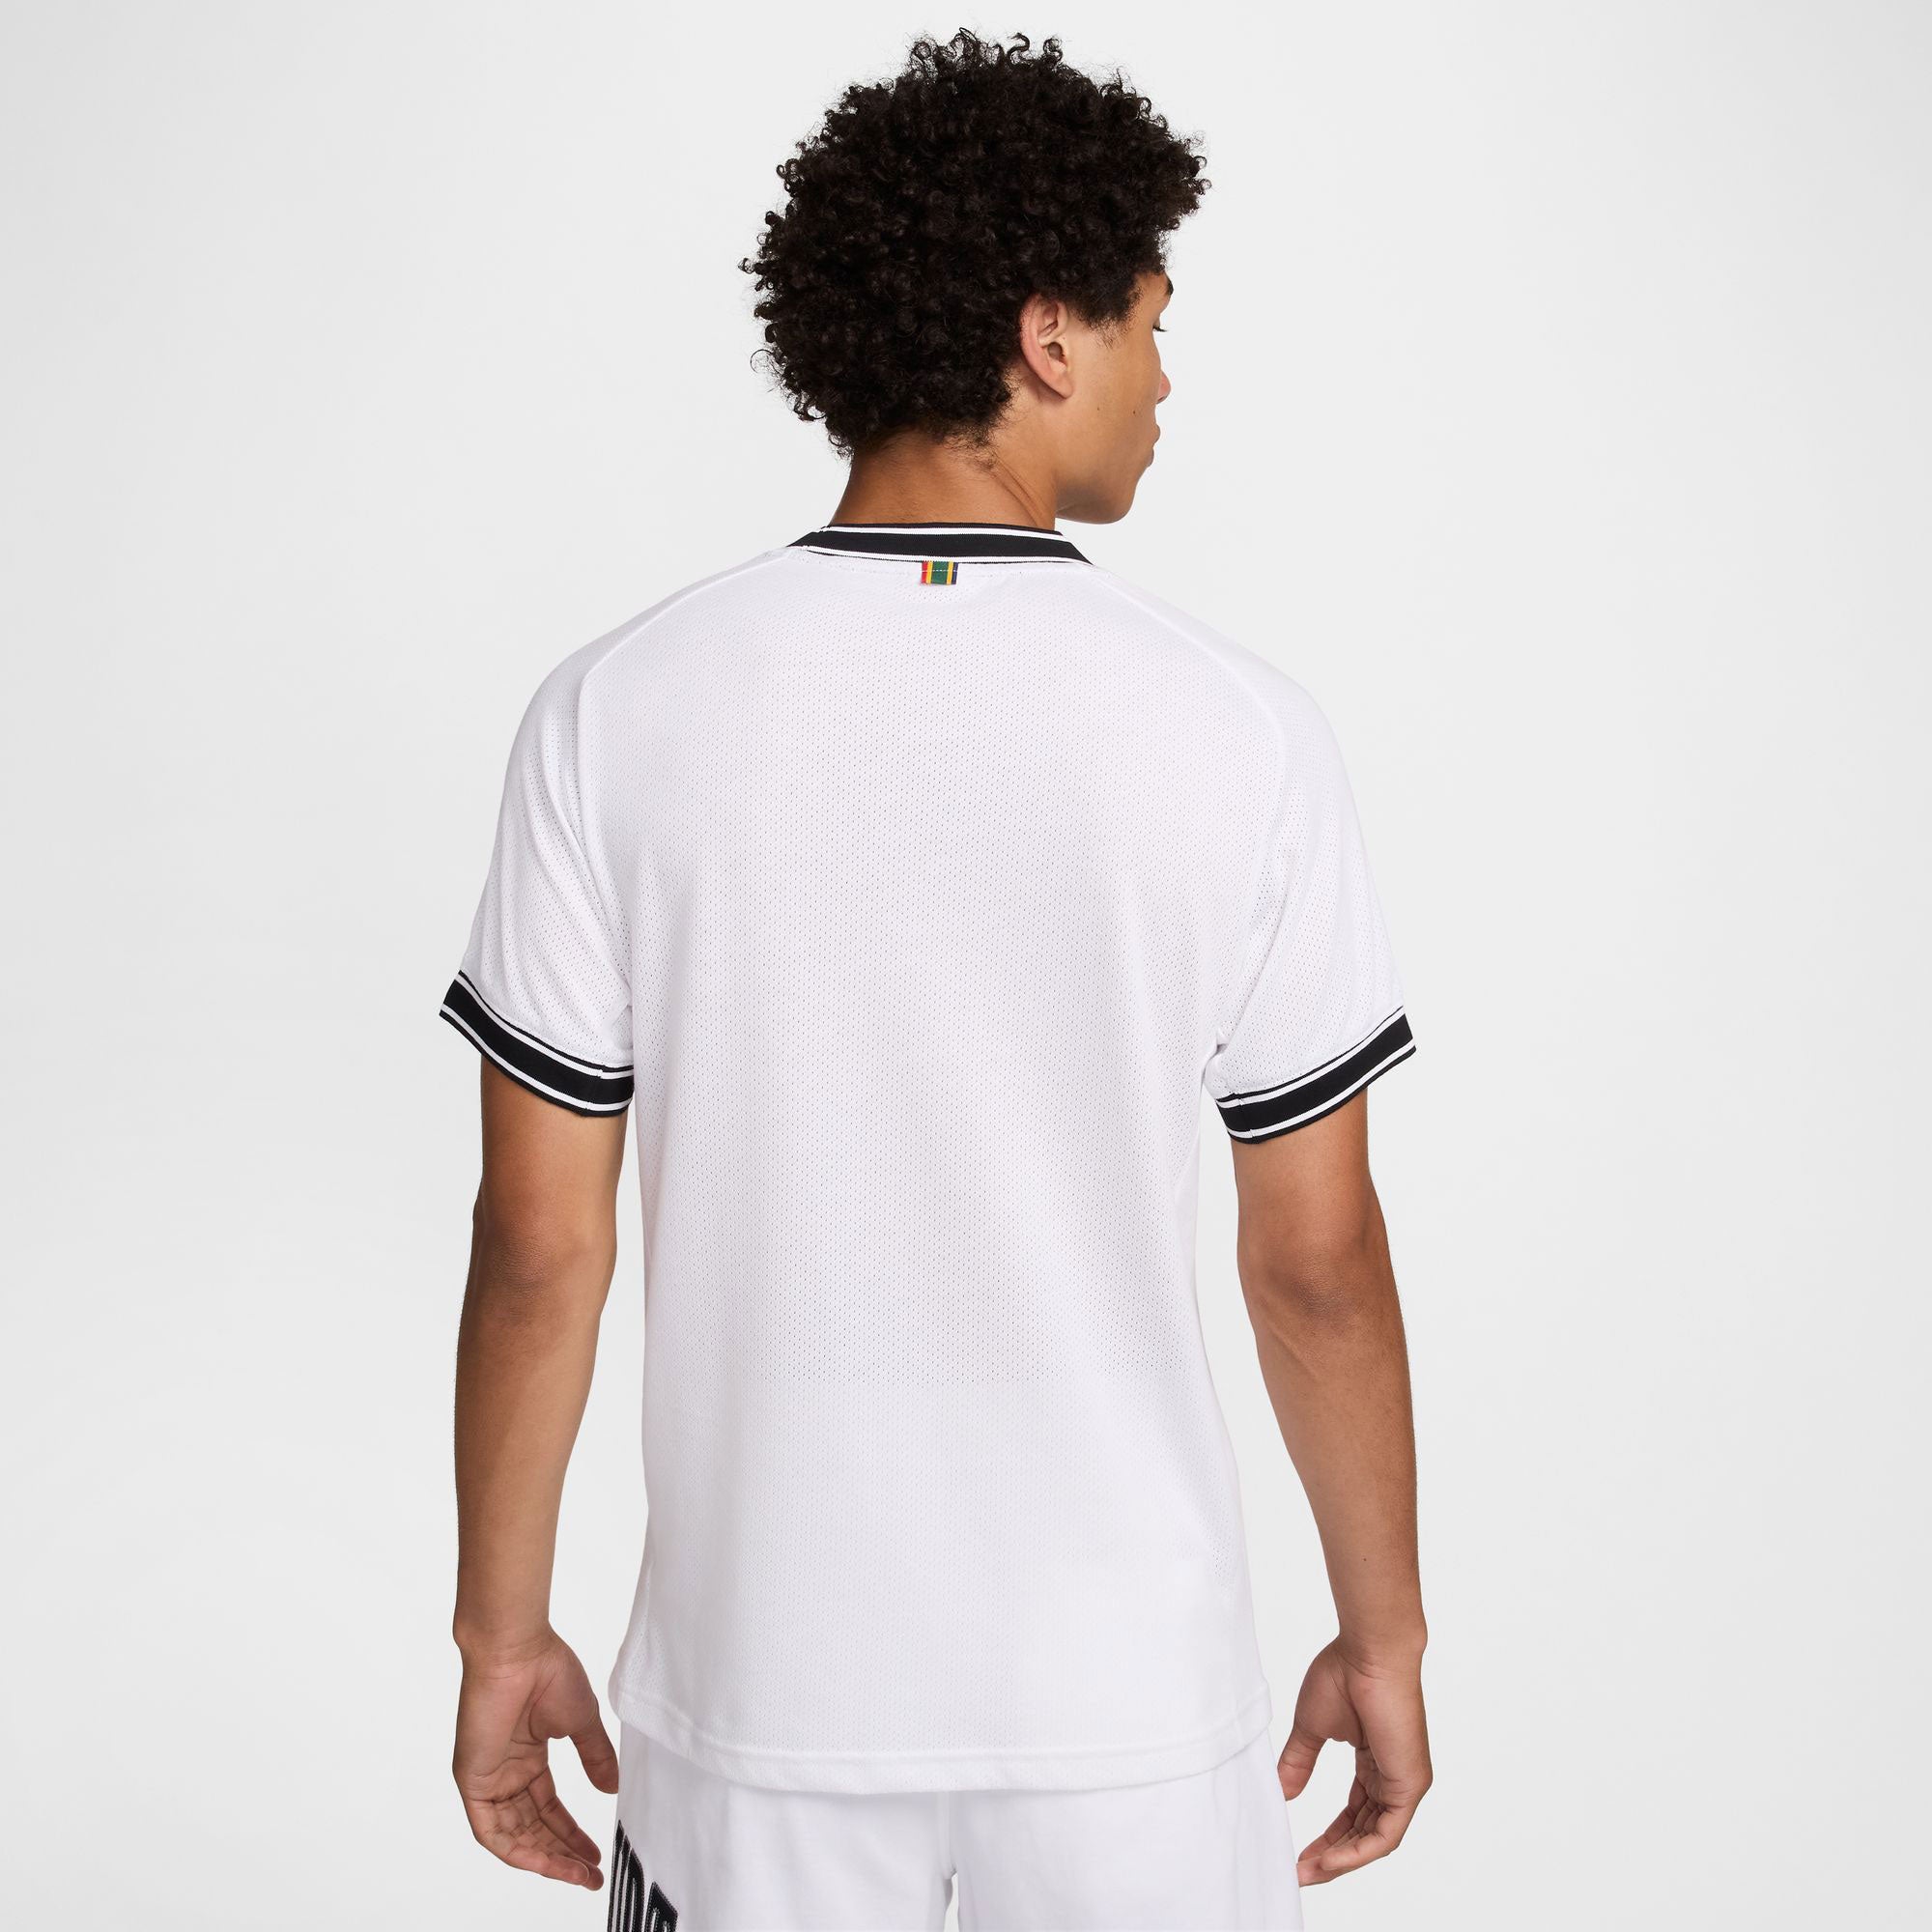 NikeCourt Heritage Mens Tennis Shirt - White (2)